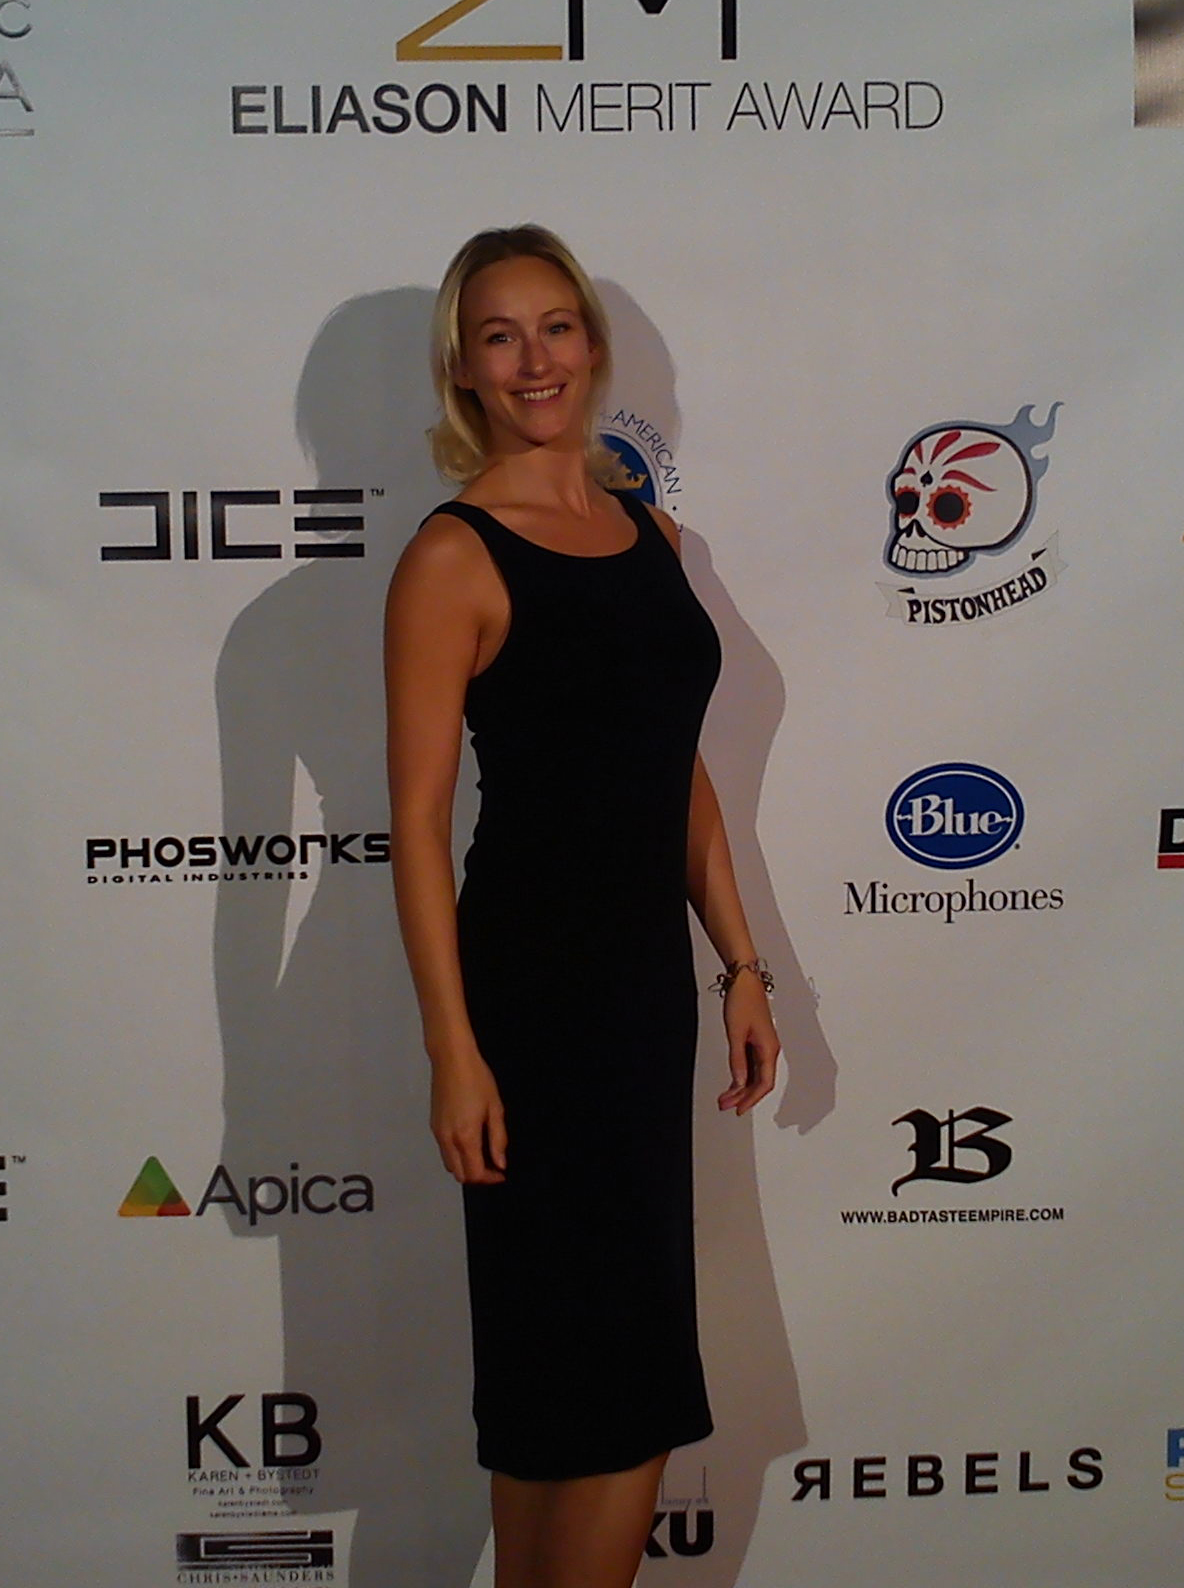 Nathalie Söderqvist at Eliason Merit Award 2013, Los Angeles